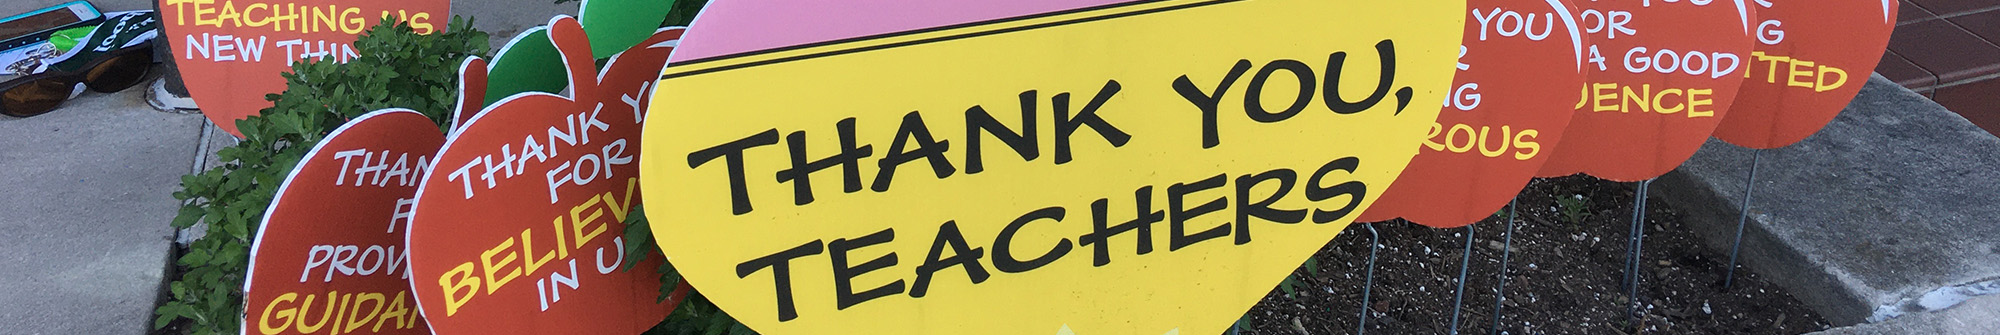 Teacher appreciation signs outside on school campus